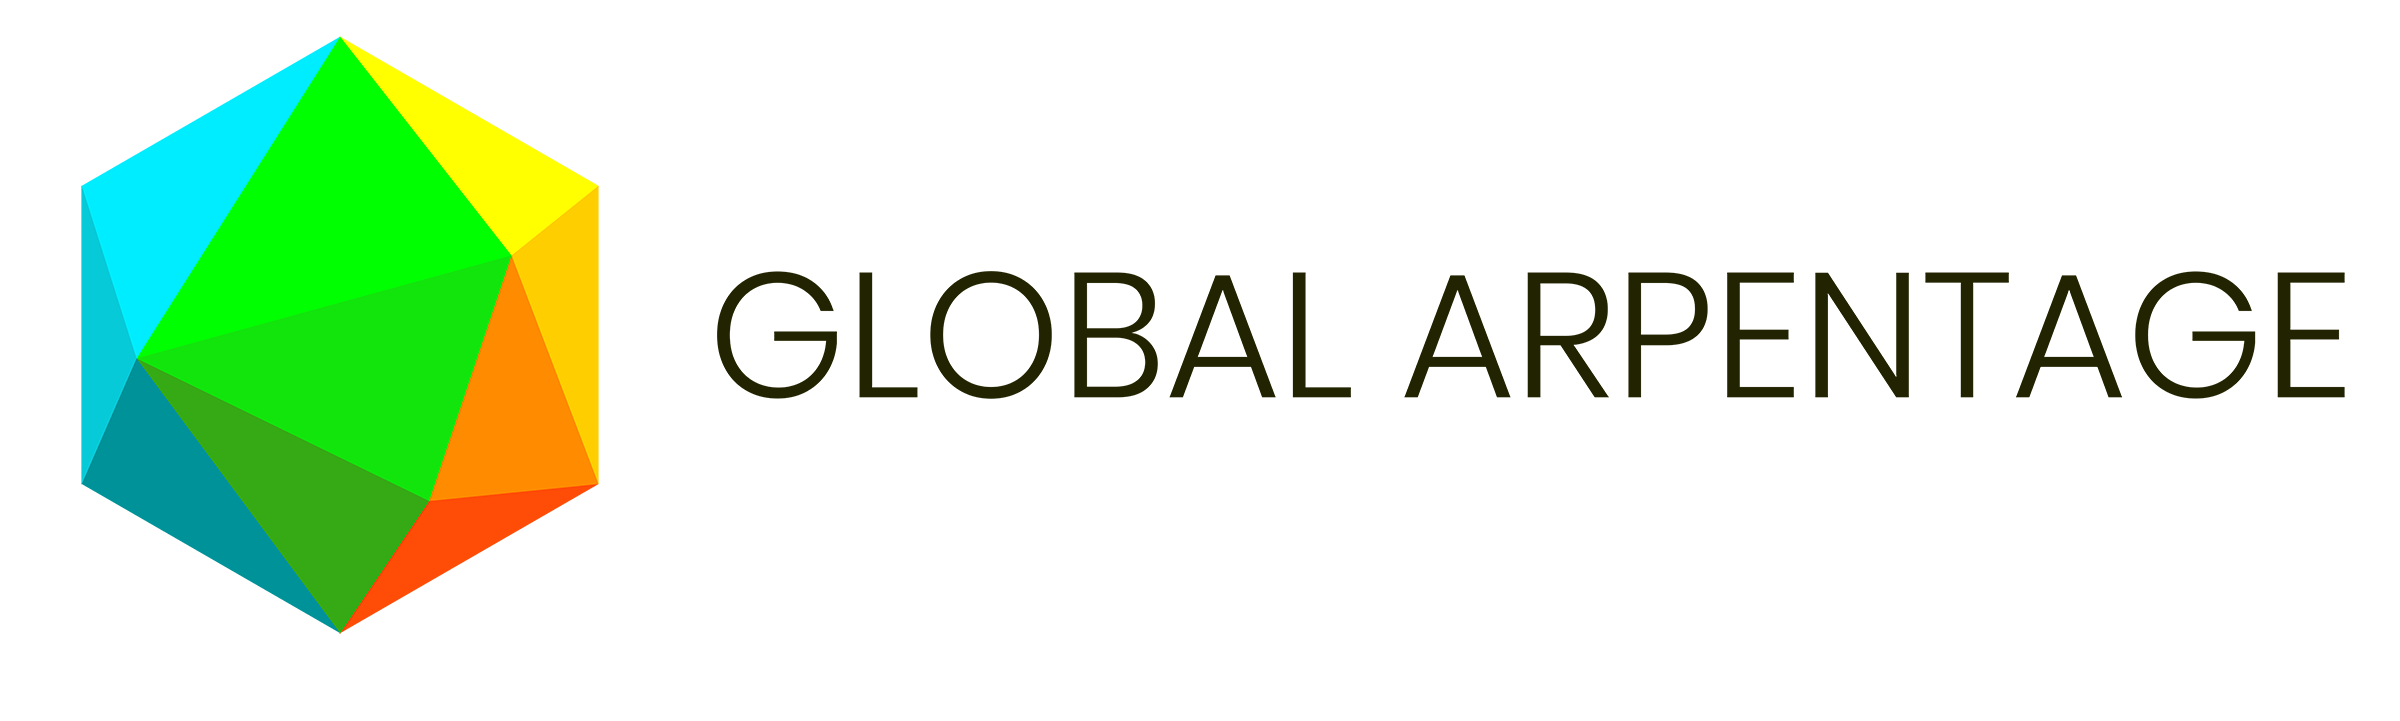 Global Arpentage-04 2500